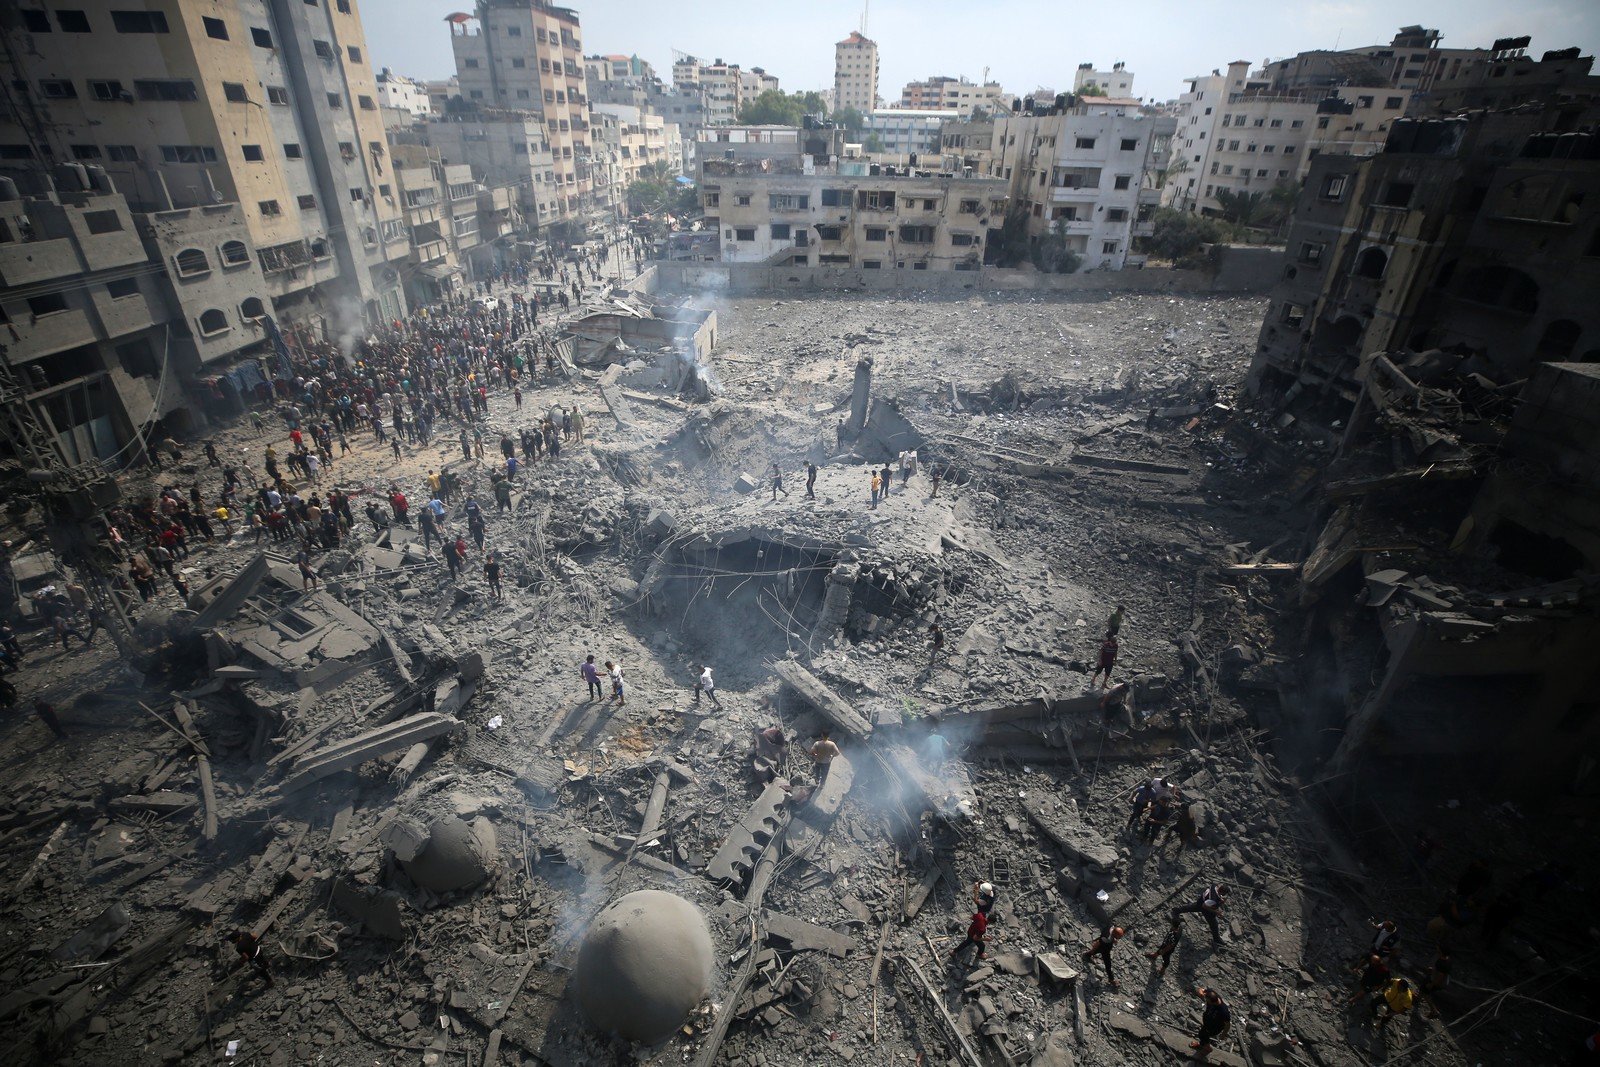 OXFAM CALLS FOR HUMANITARIAN CORRIDOR IN GAZA TO ALLOW ACCESS 